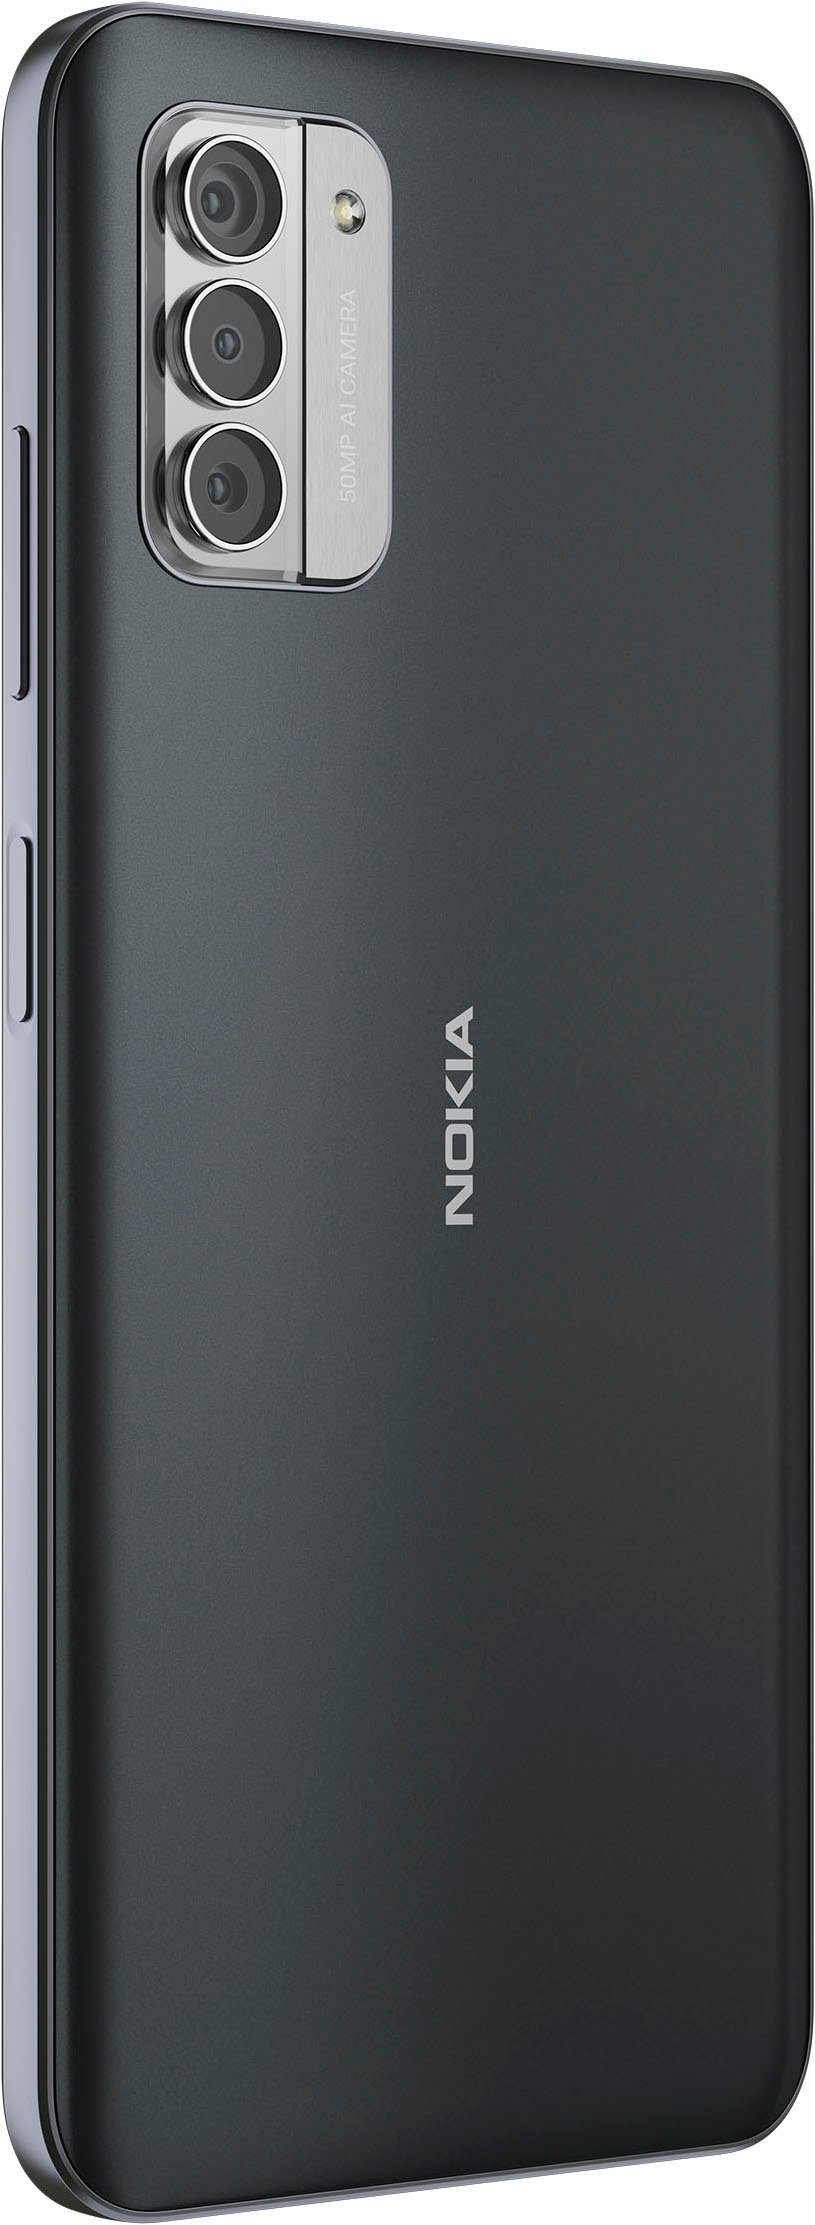 grau Smartphone cm/6,65 50 (16,9 MP 128 Zoll, G42 GB Speicherplatz, Nokia Kamera)